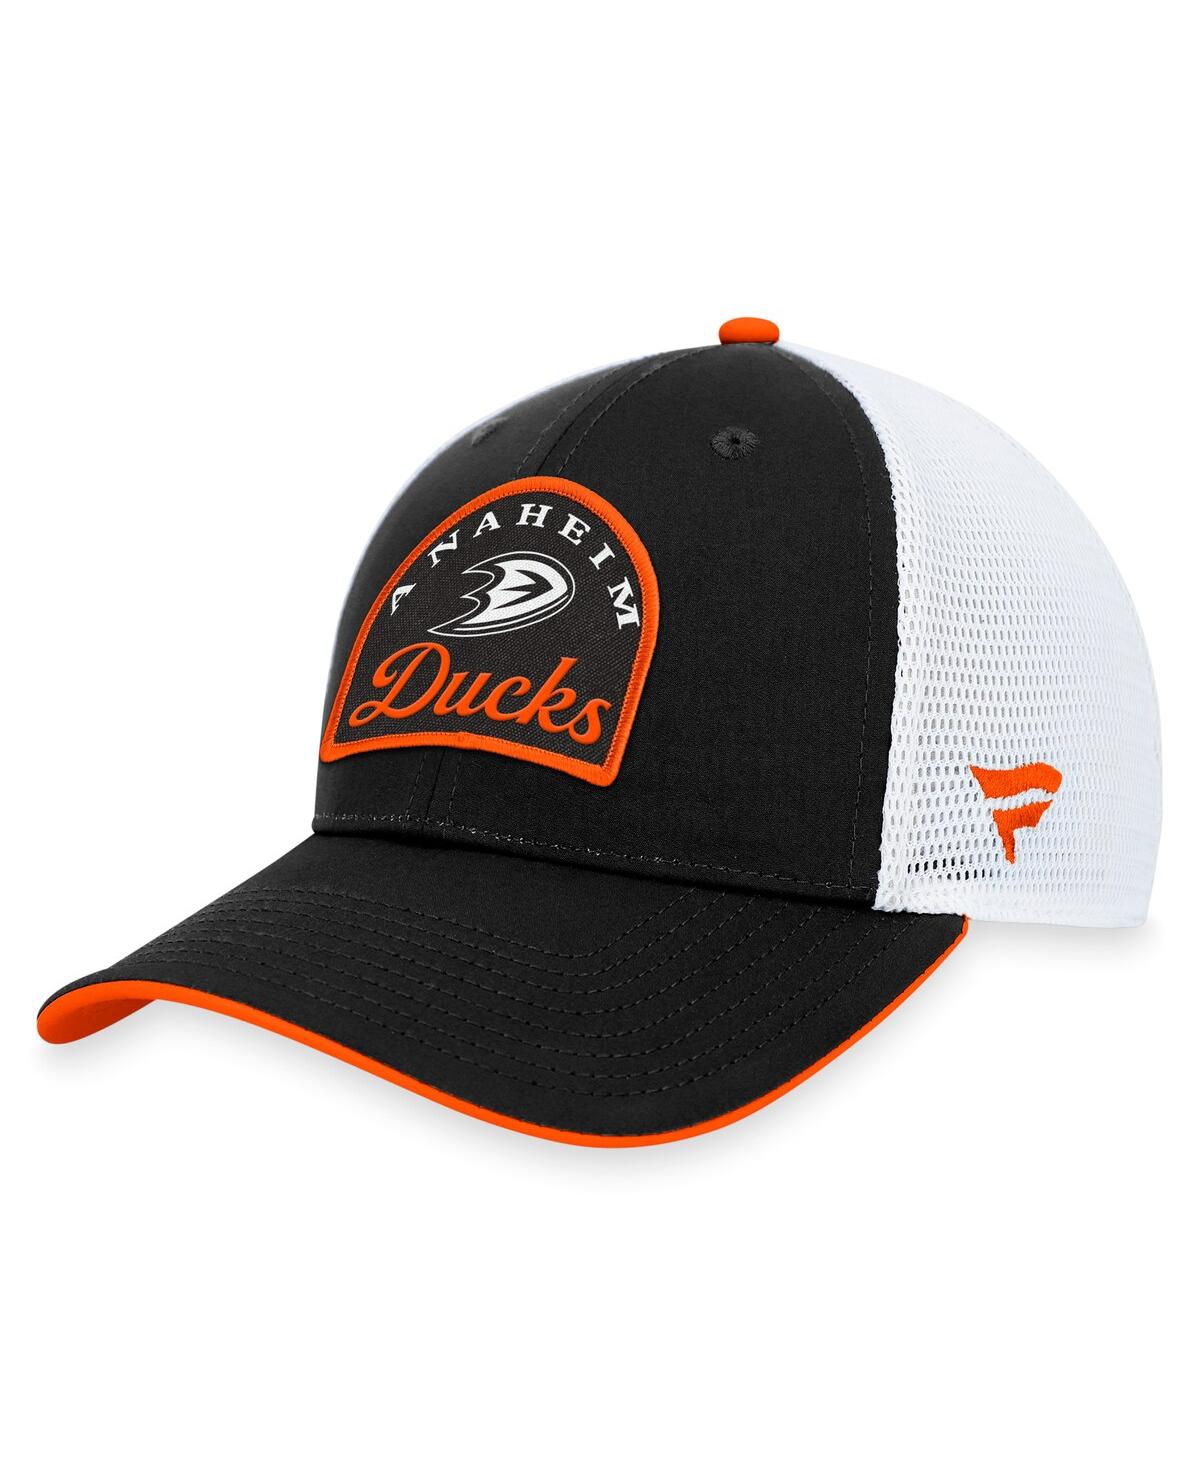 Branded Men's Black/White Anaheim Ducks Fundamental Adjustable Hat - Black/whit